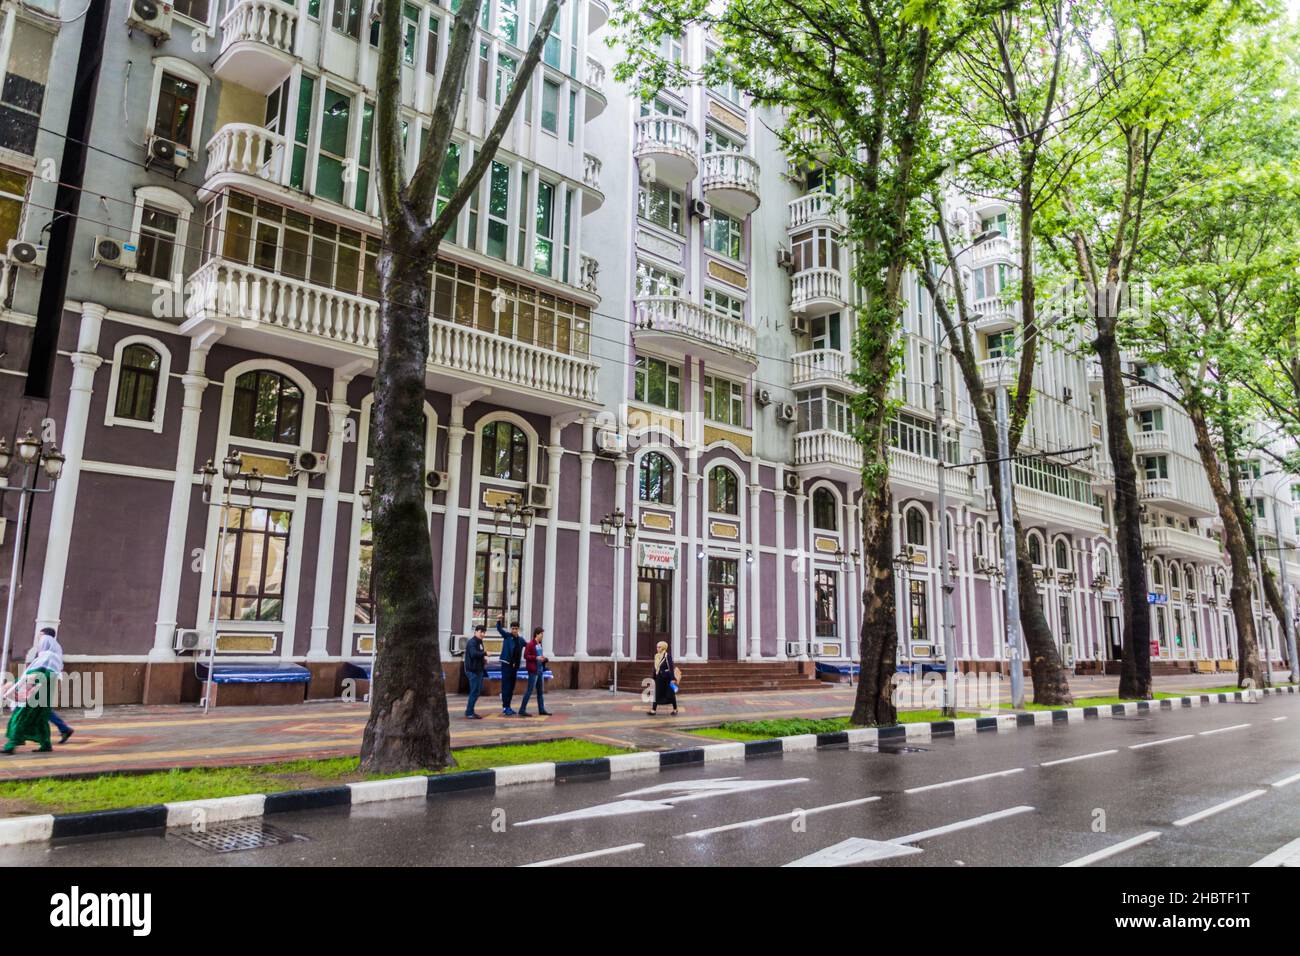 DUSHANBE, TAJIKISTAN - MAY 16, 2018: Buildings by Rudaki Avenue in Dushanbe, capital of Tajikistan Stock Photo